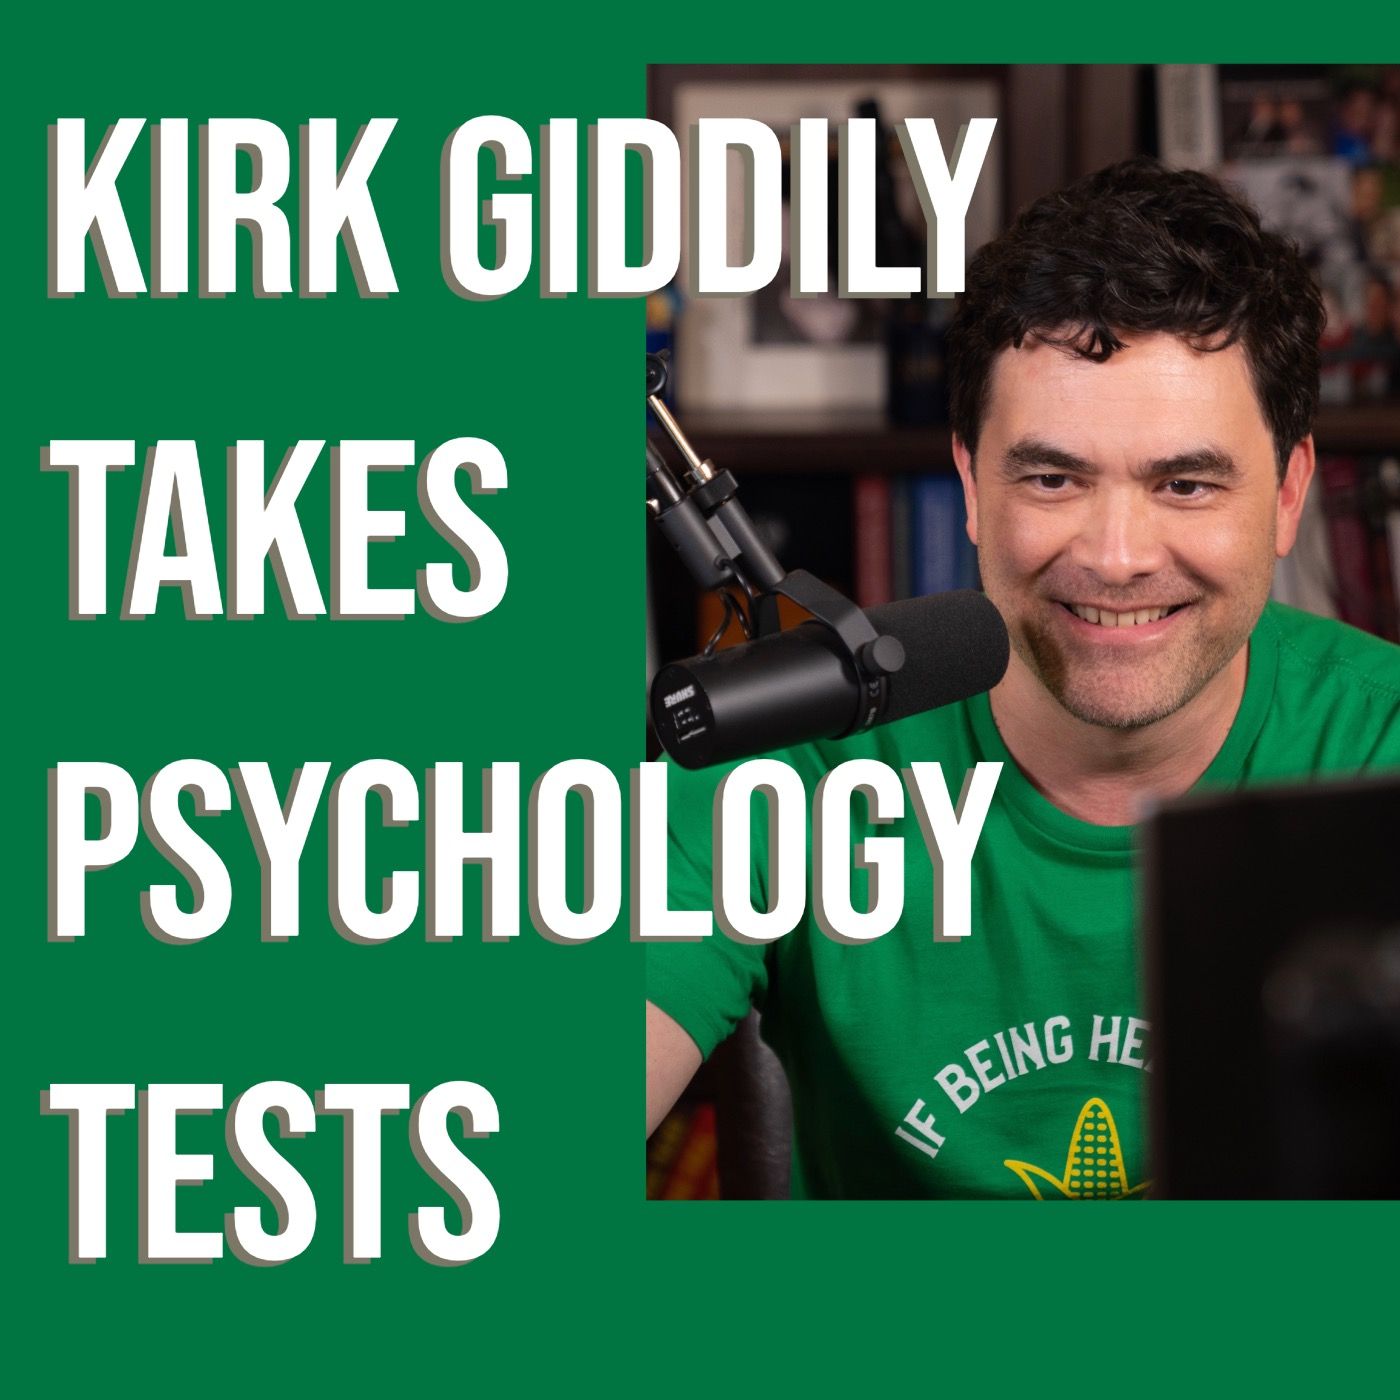 Kirk giddily takes psychology tests